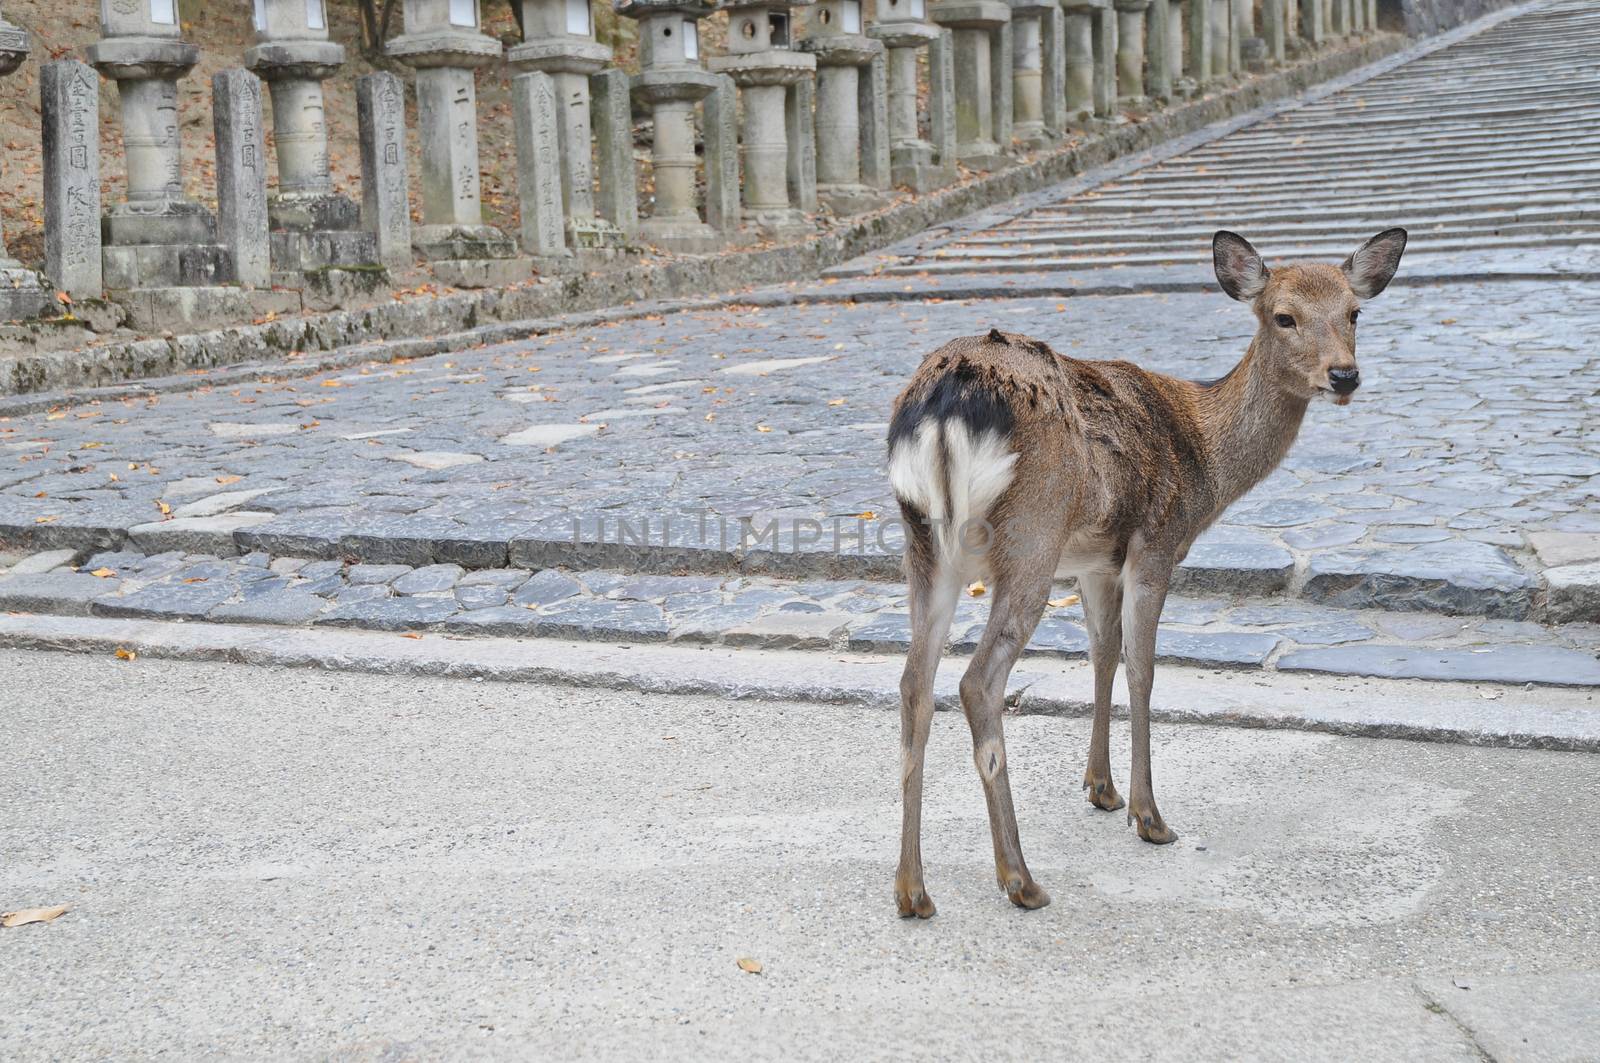 Japanese brown deer on an ancient stone road in Nara Japan